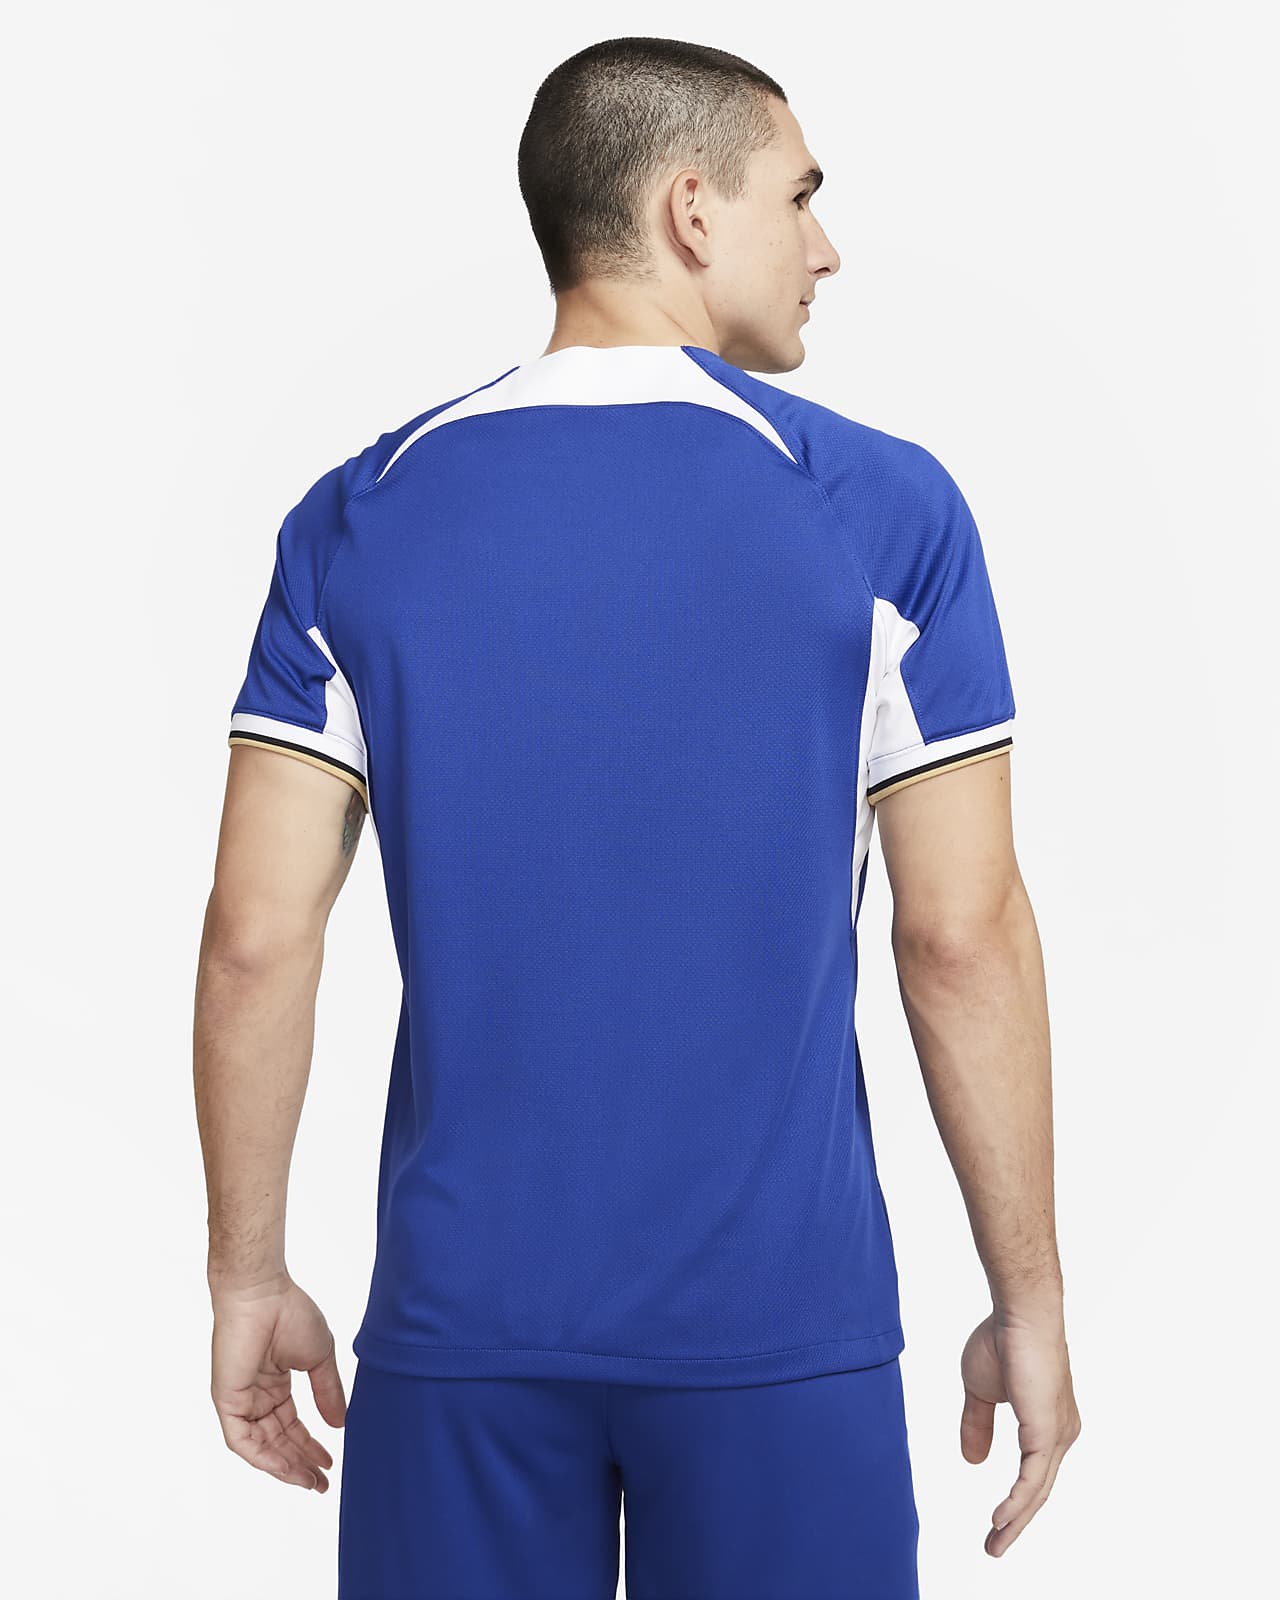 chelsea soccer clothing